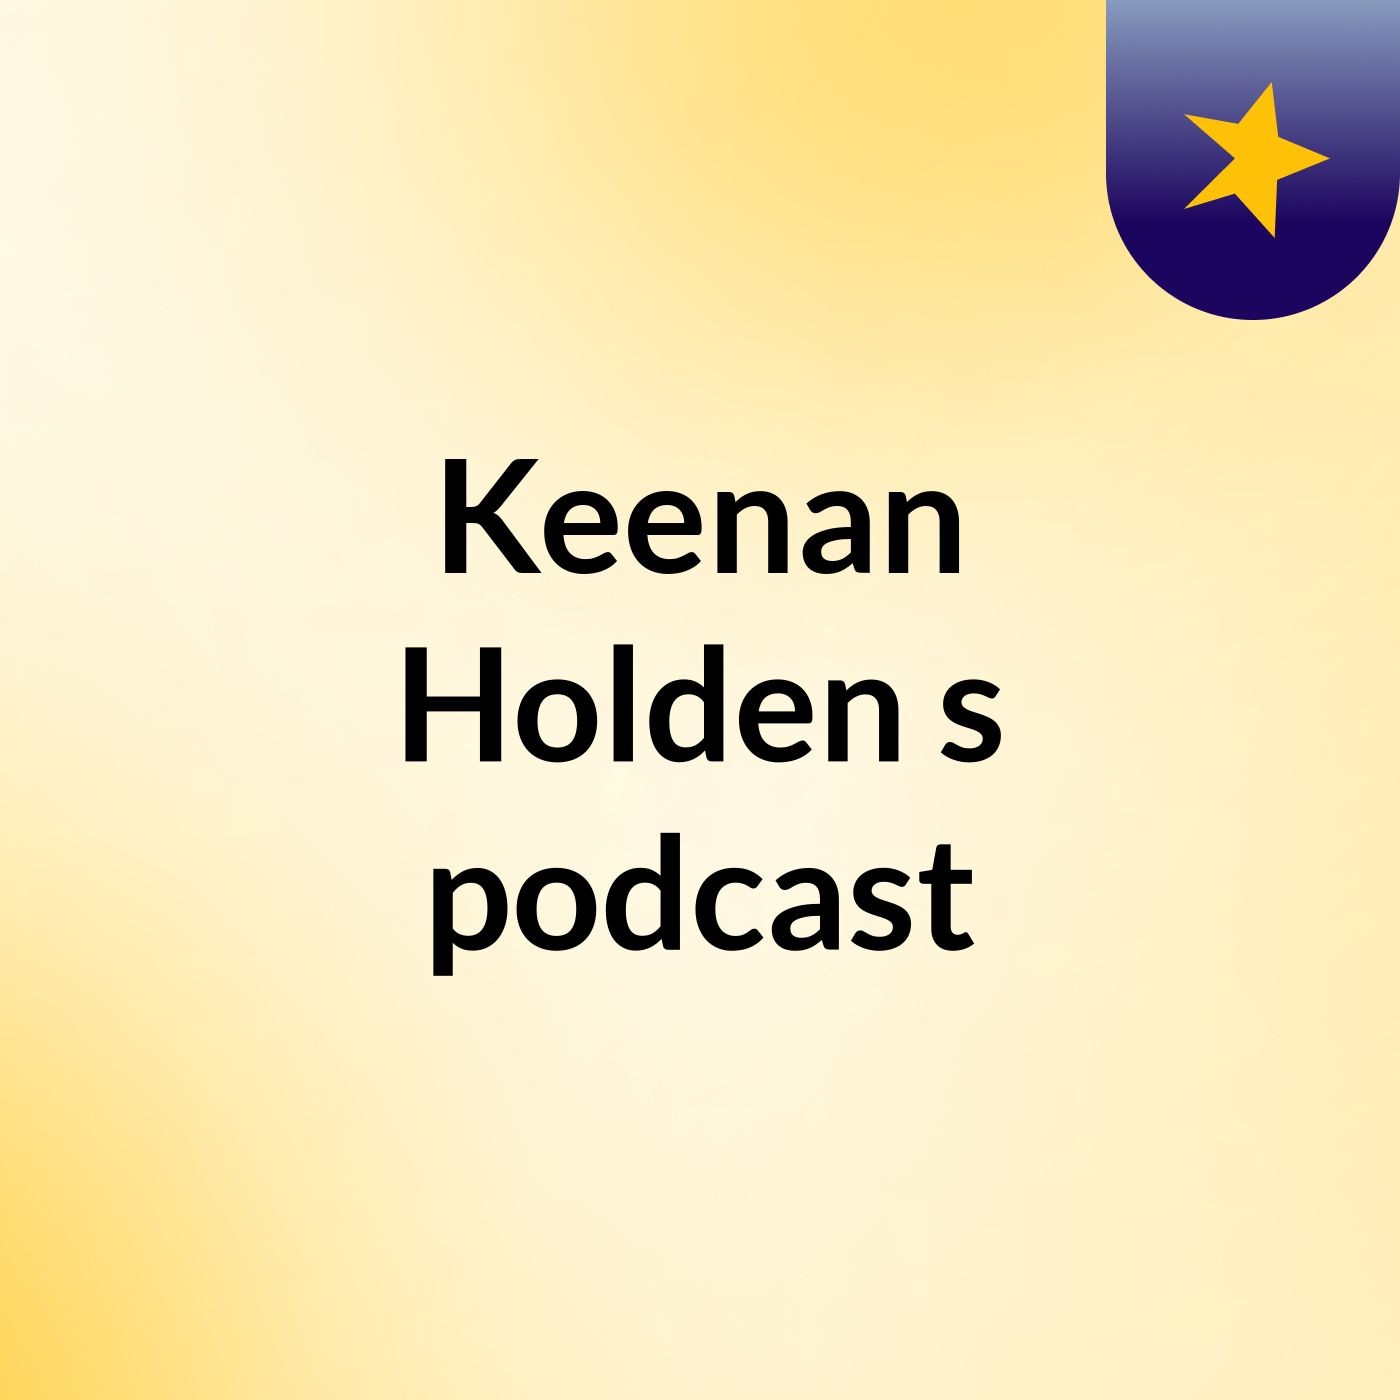 Keenan Holden's podcast